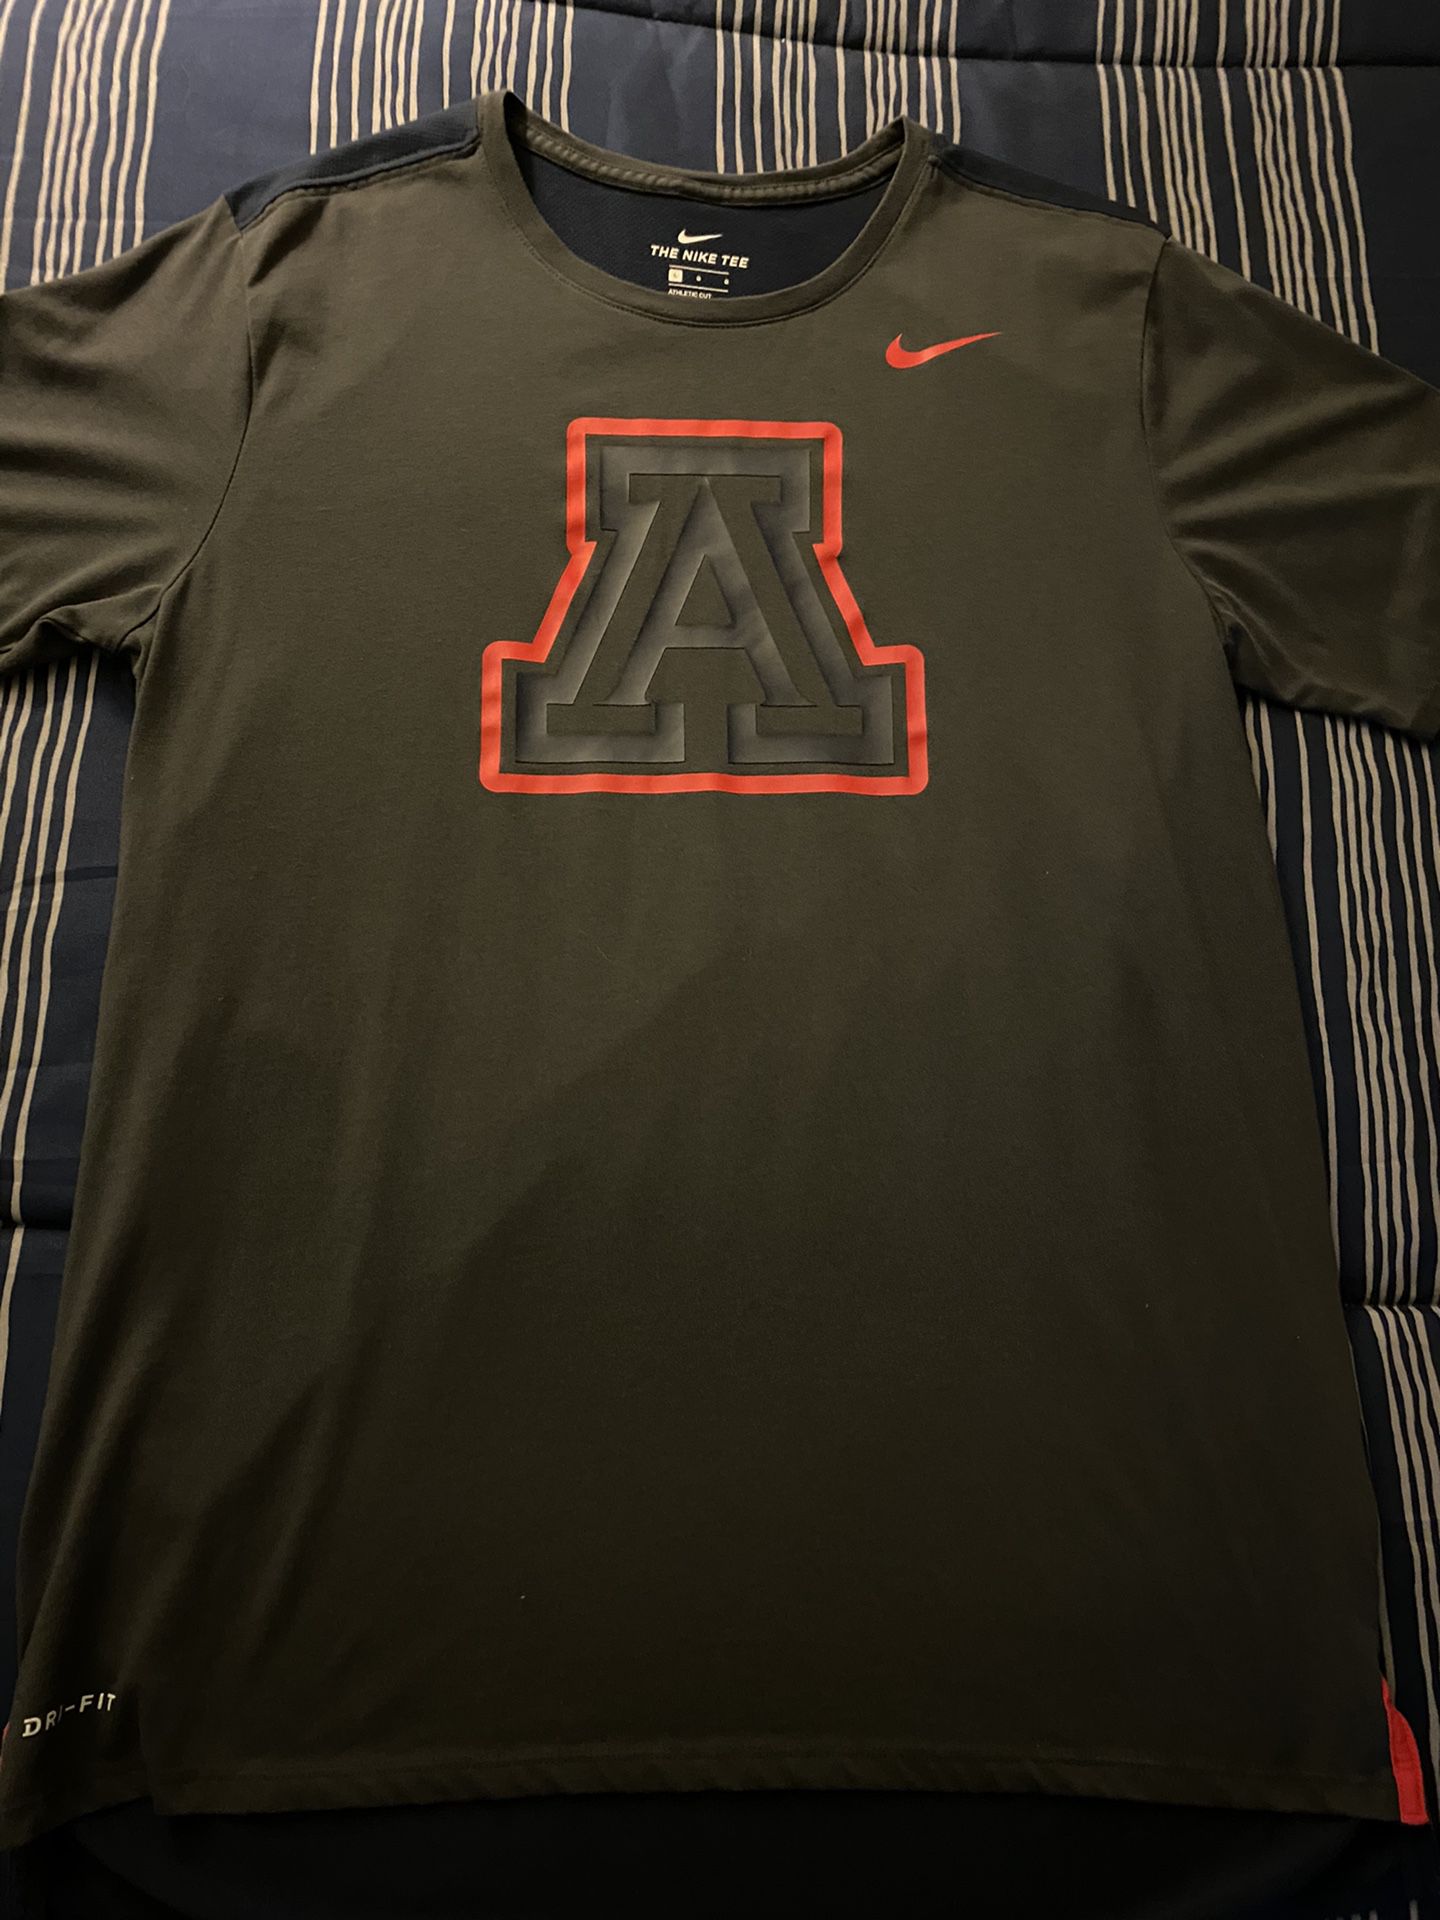 Men’s Large University Of Arizona Nike Shirt